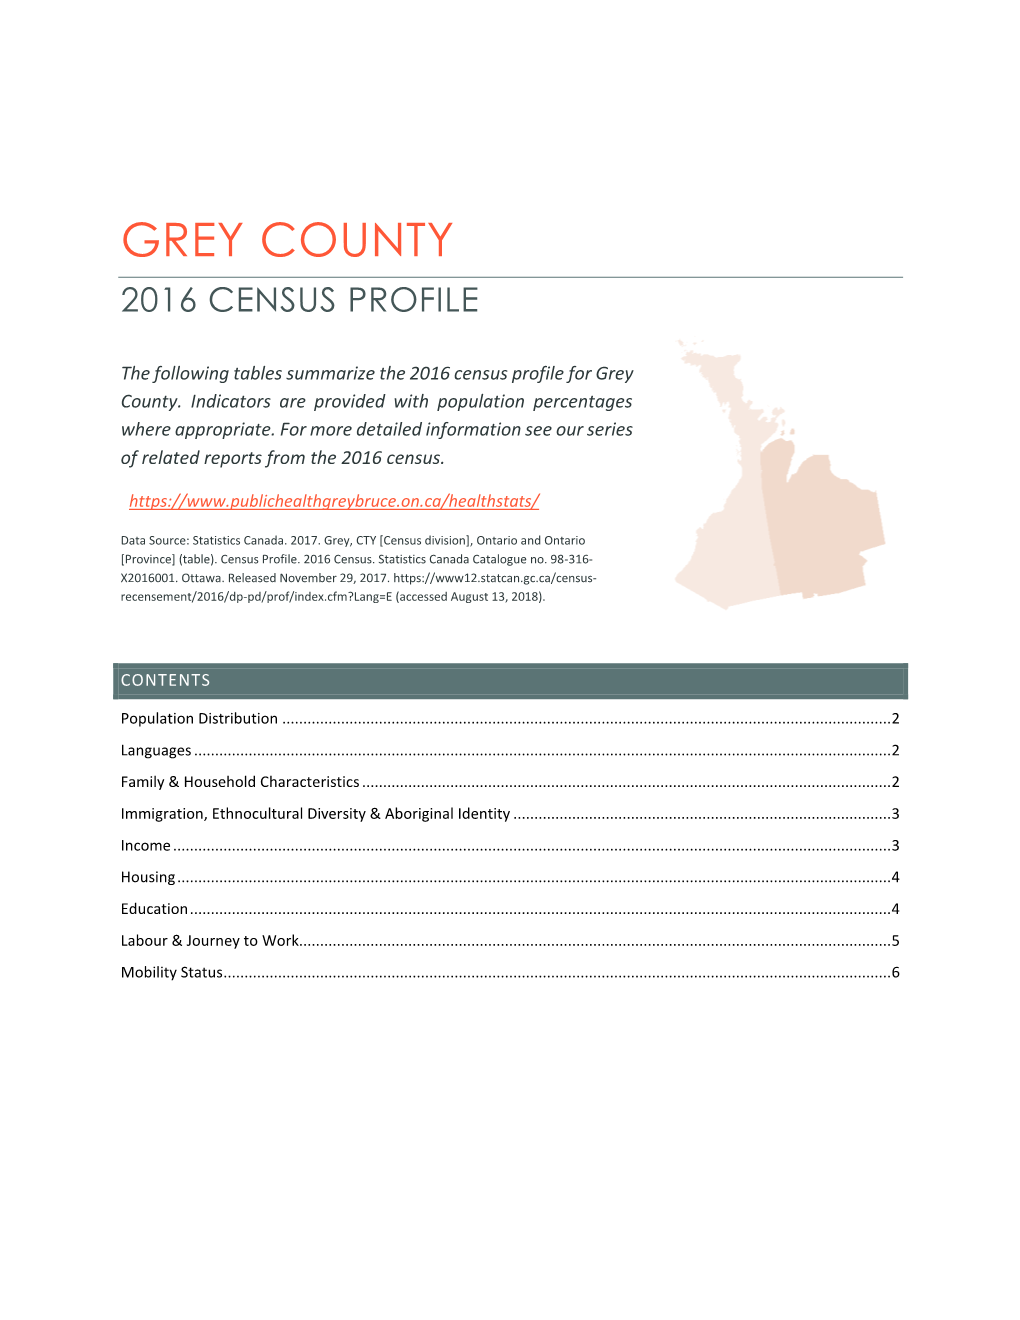 Grey County 2016 Census Profile